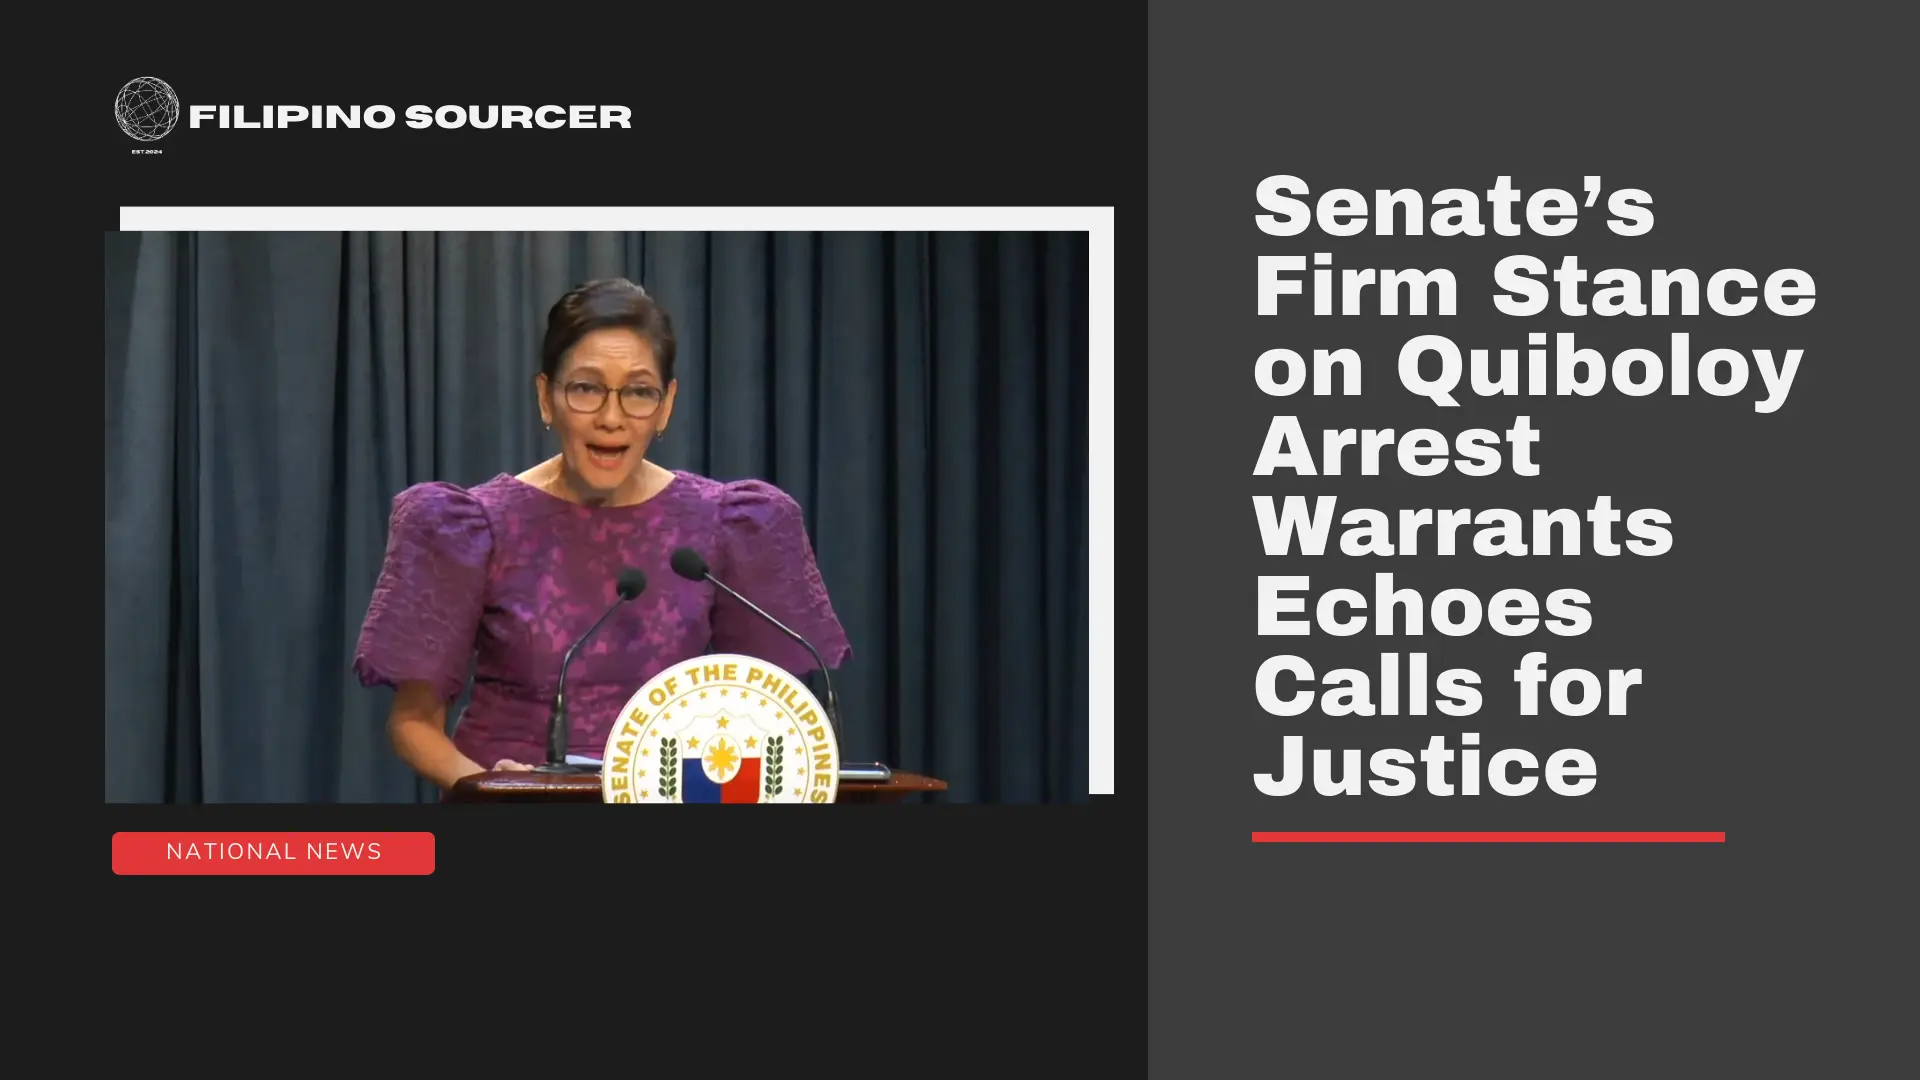 Senate’s Firm Stance on Quiboloy Arrest Warrants Echoes Calls for Justice